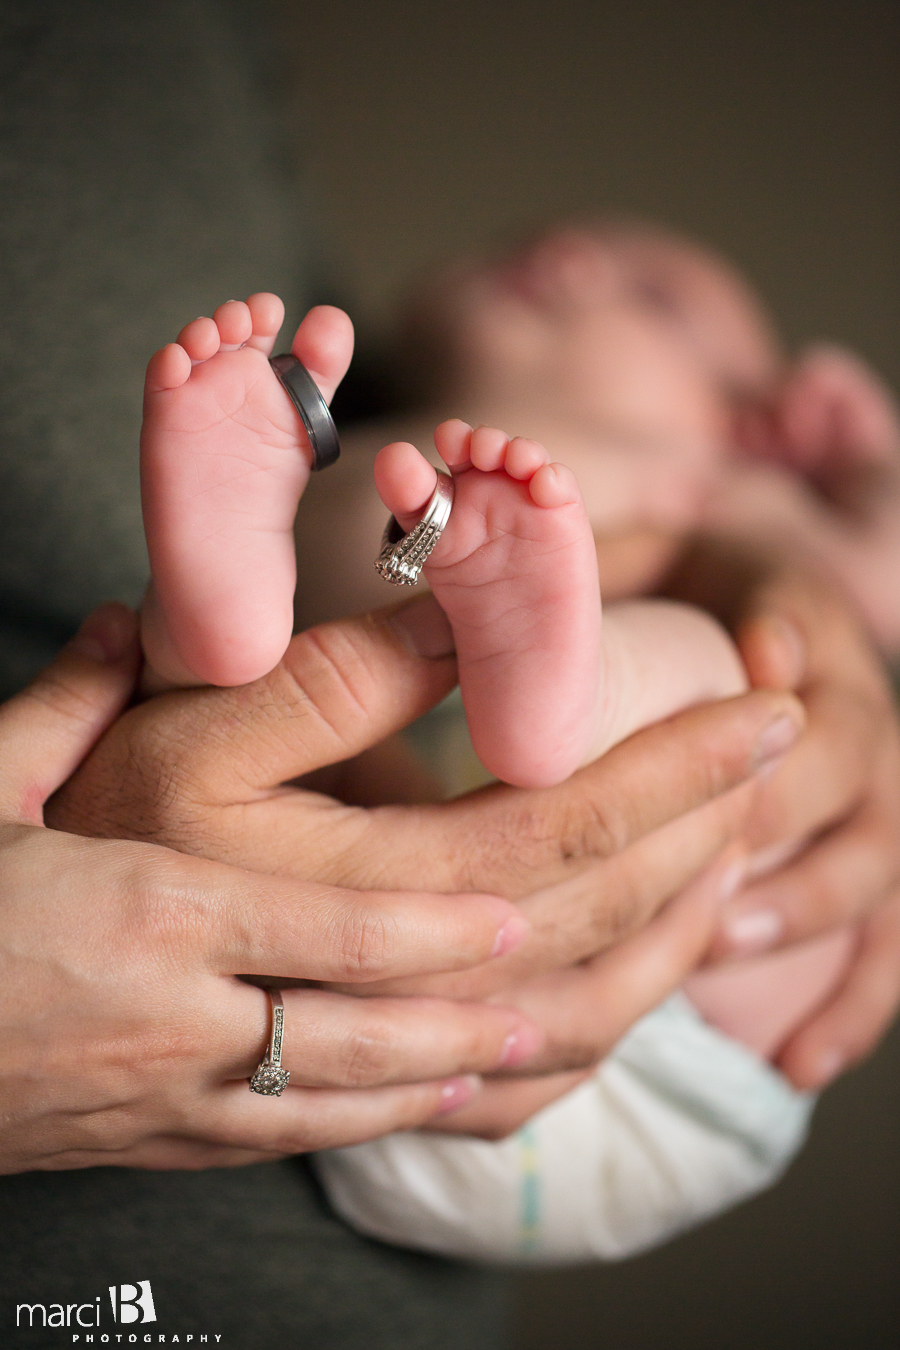 baby feet - wedding rings on toes of baby